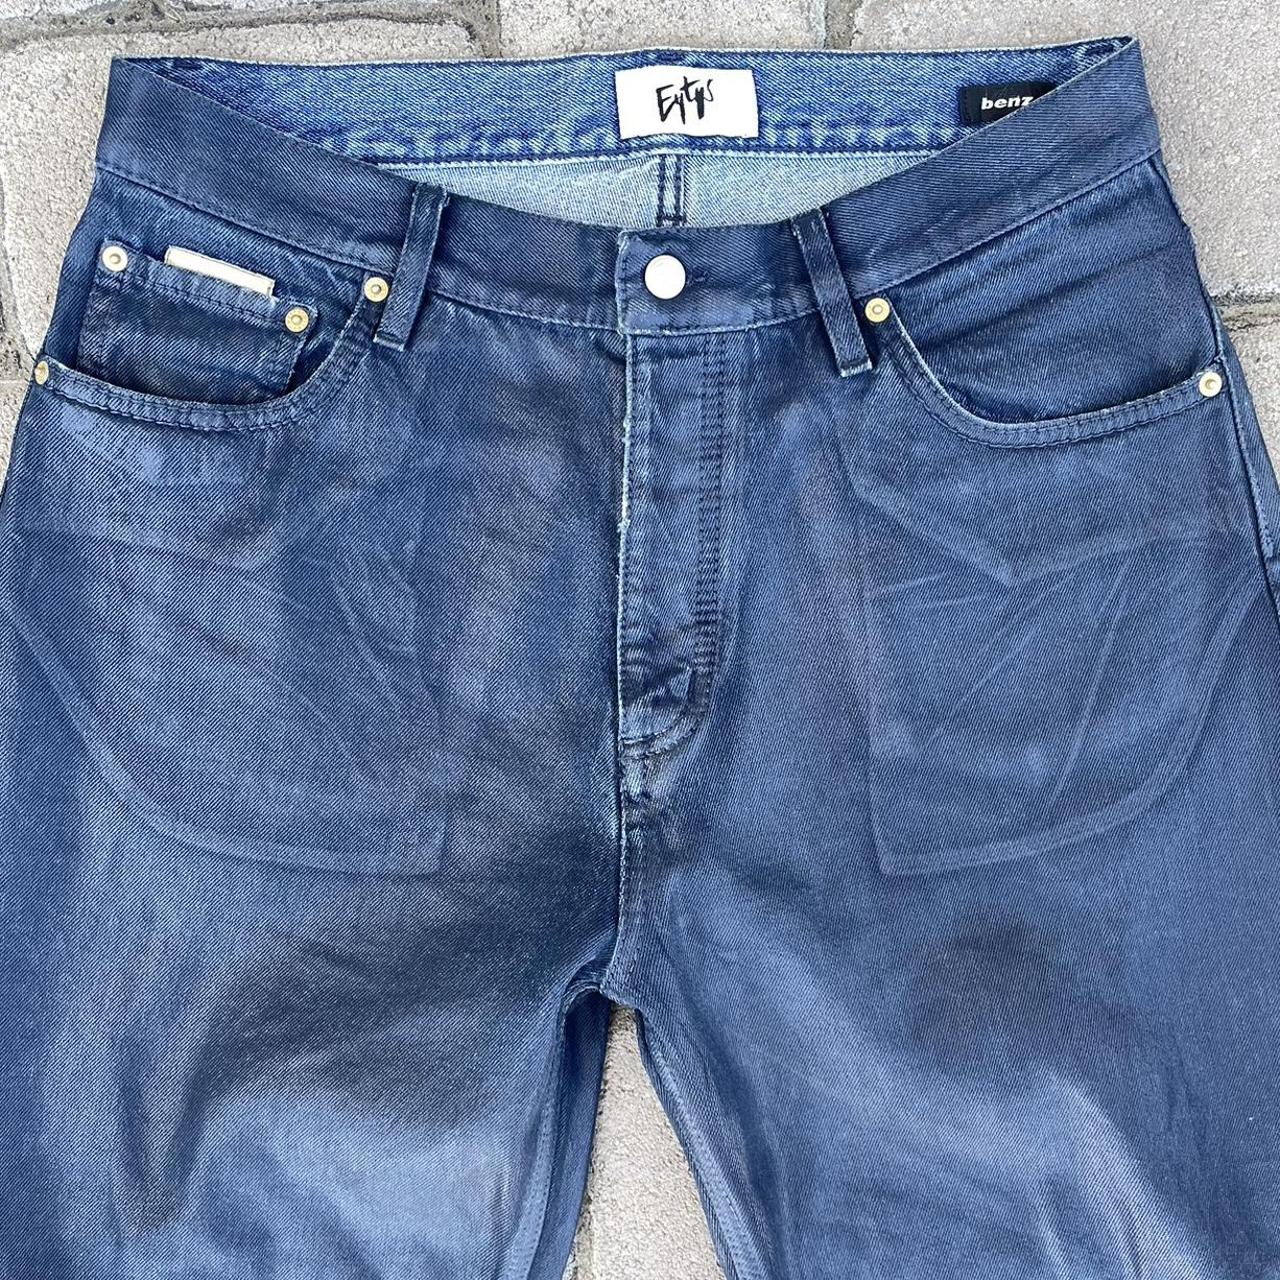 #EYTYS Benz Jeans Navy Blue Wax Coating 32/32 - Depop